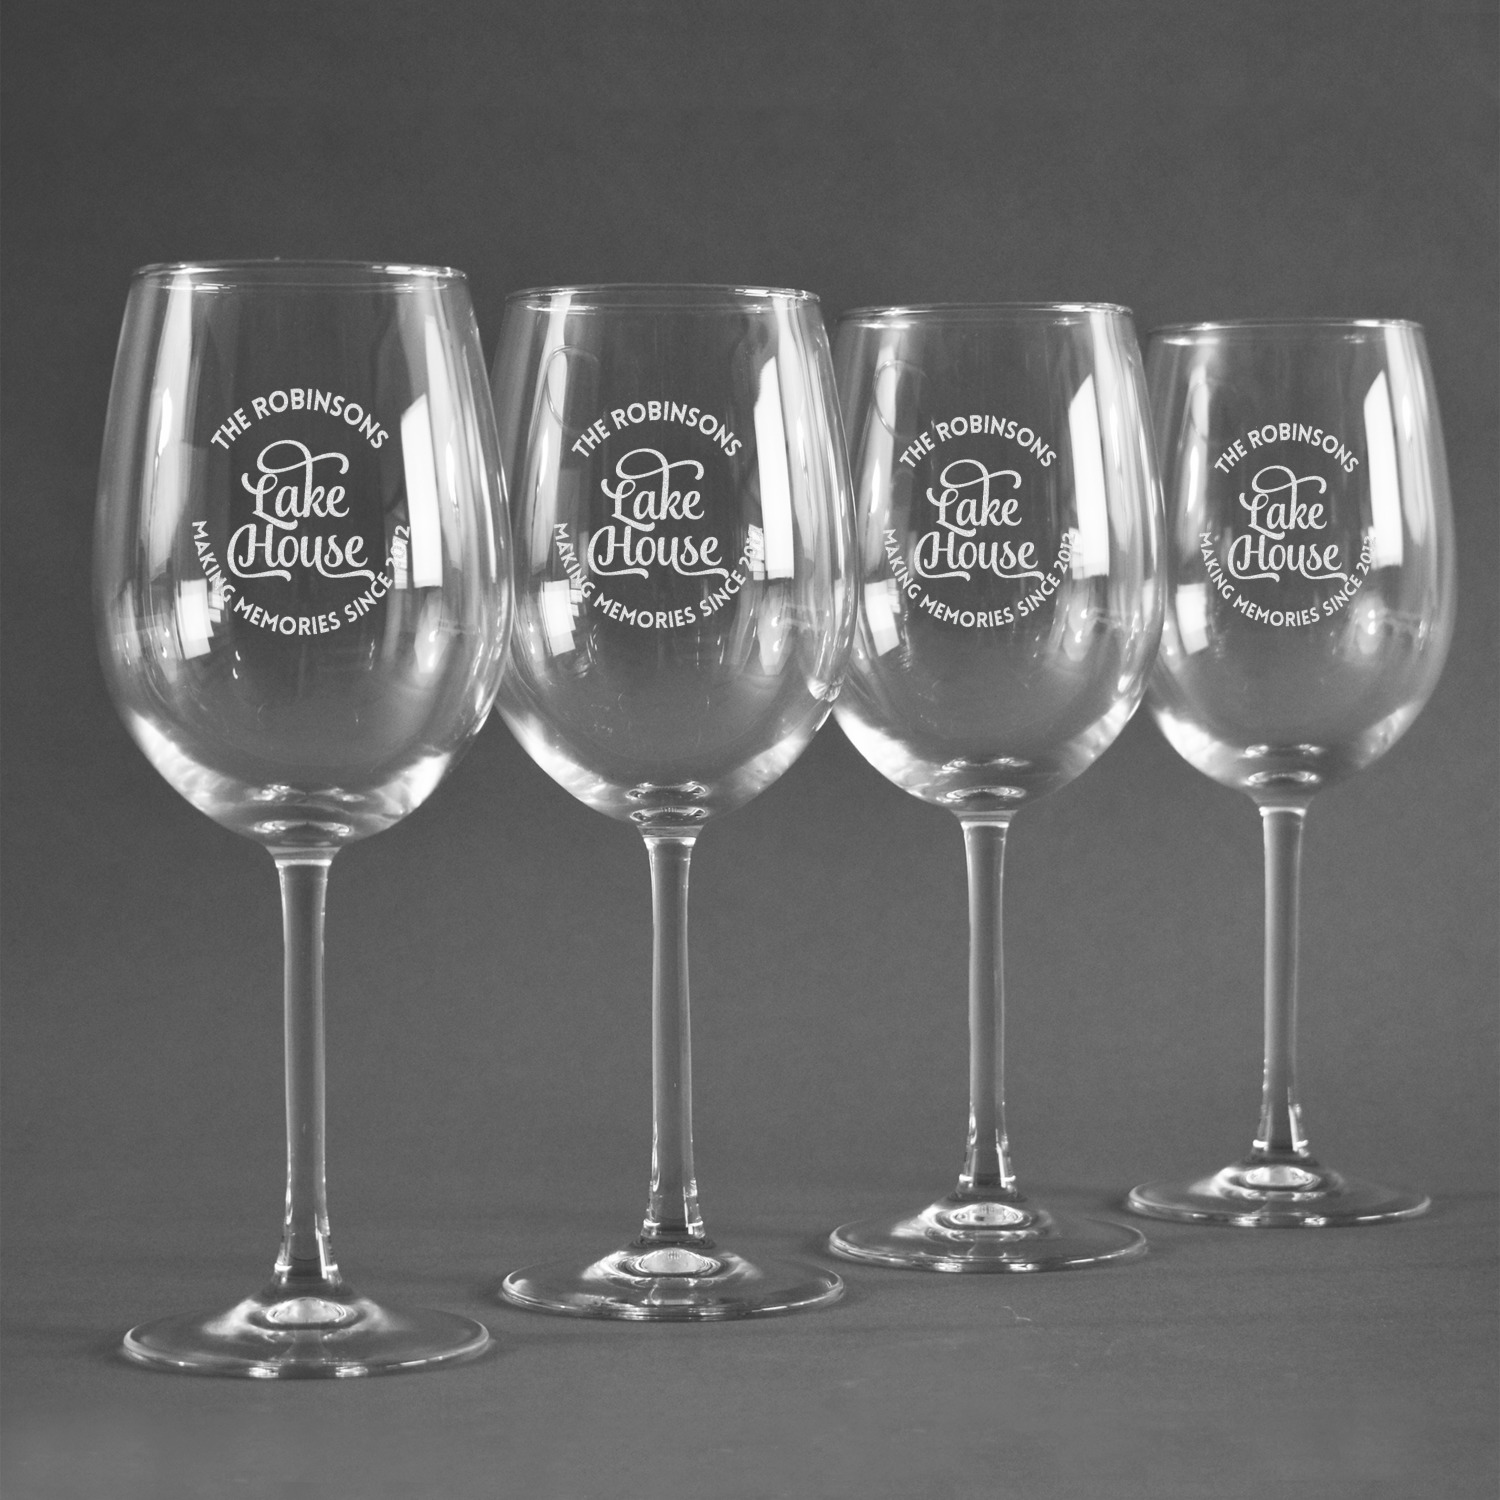 Custom Lake House #2 Wine Glass - Engraved (Personalized)